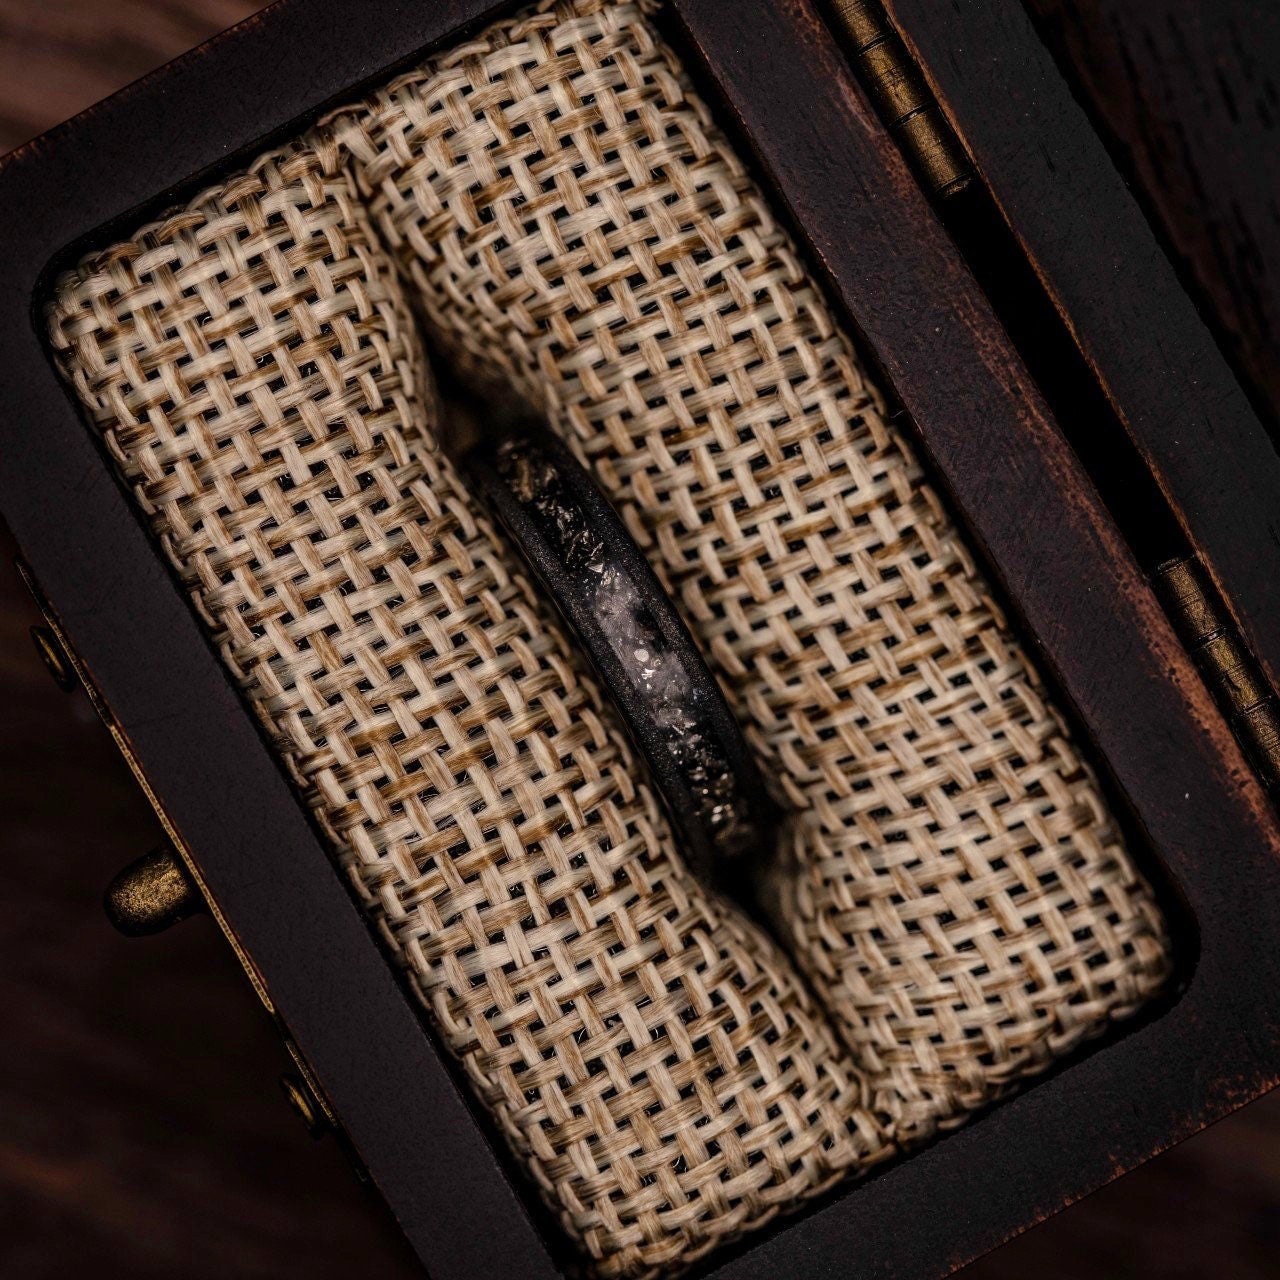 Women's Black Tungsten Wedding Ring with Meteorite inlay and Sandblasted finish inside walnut ring box between burlap cushions